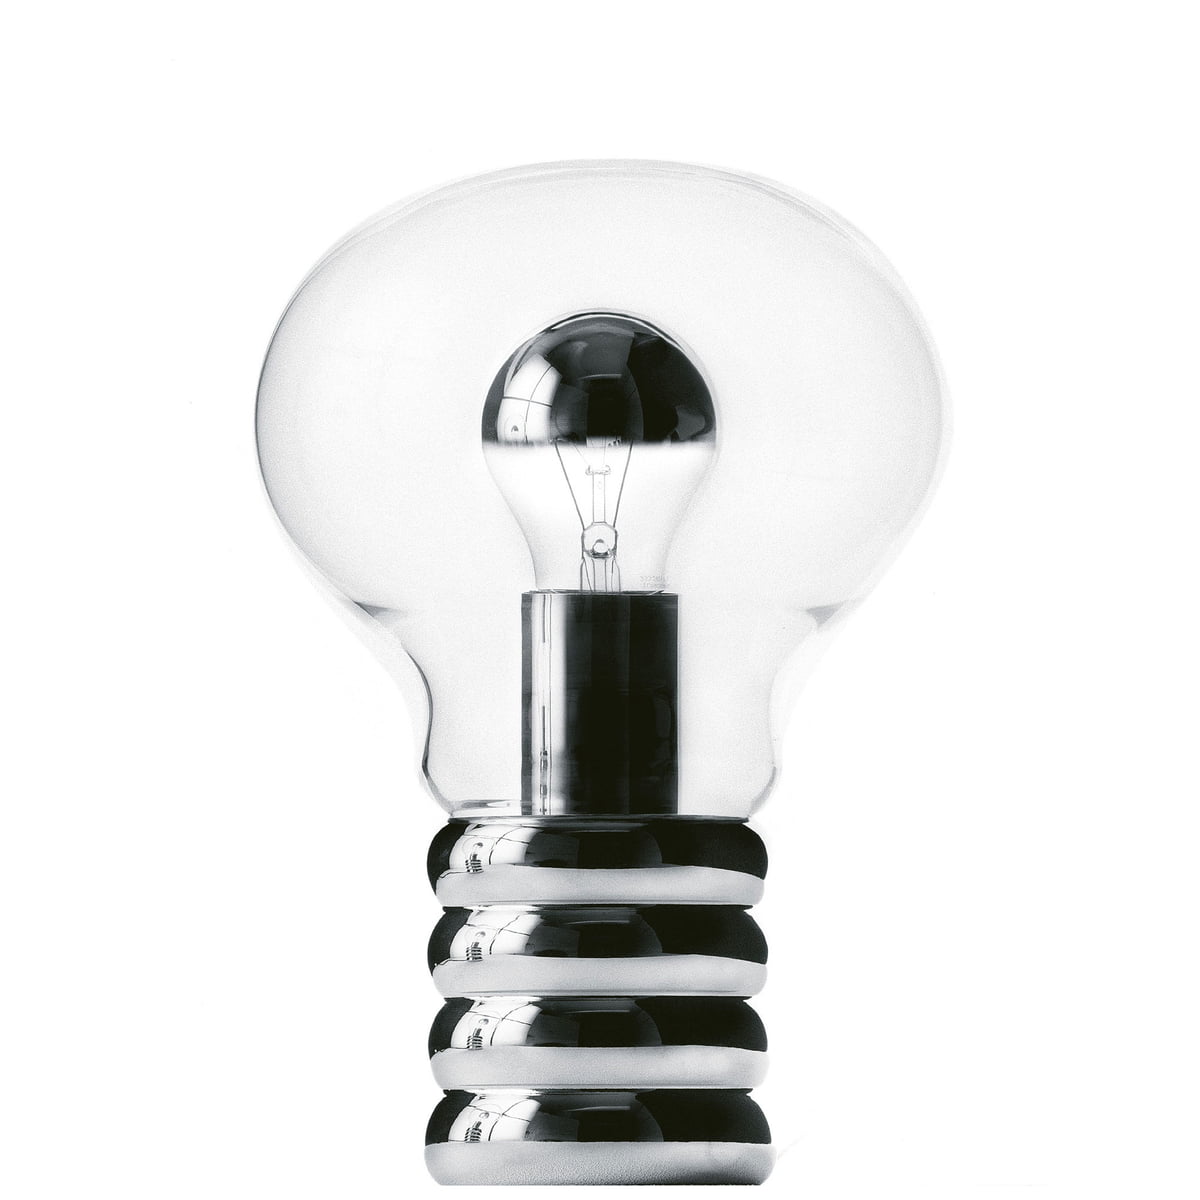 Product Image Bulb